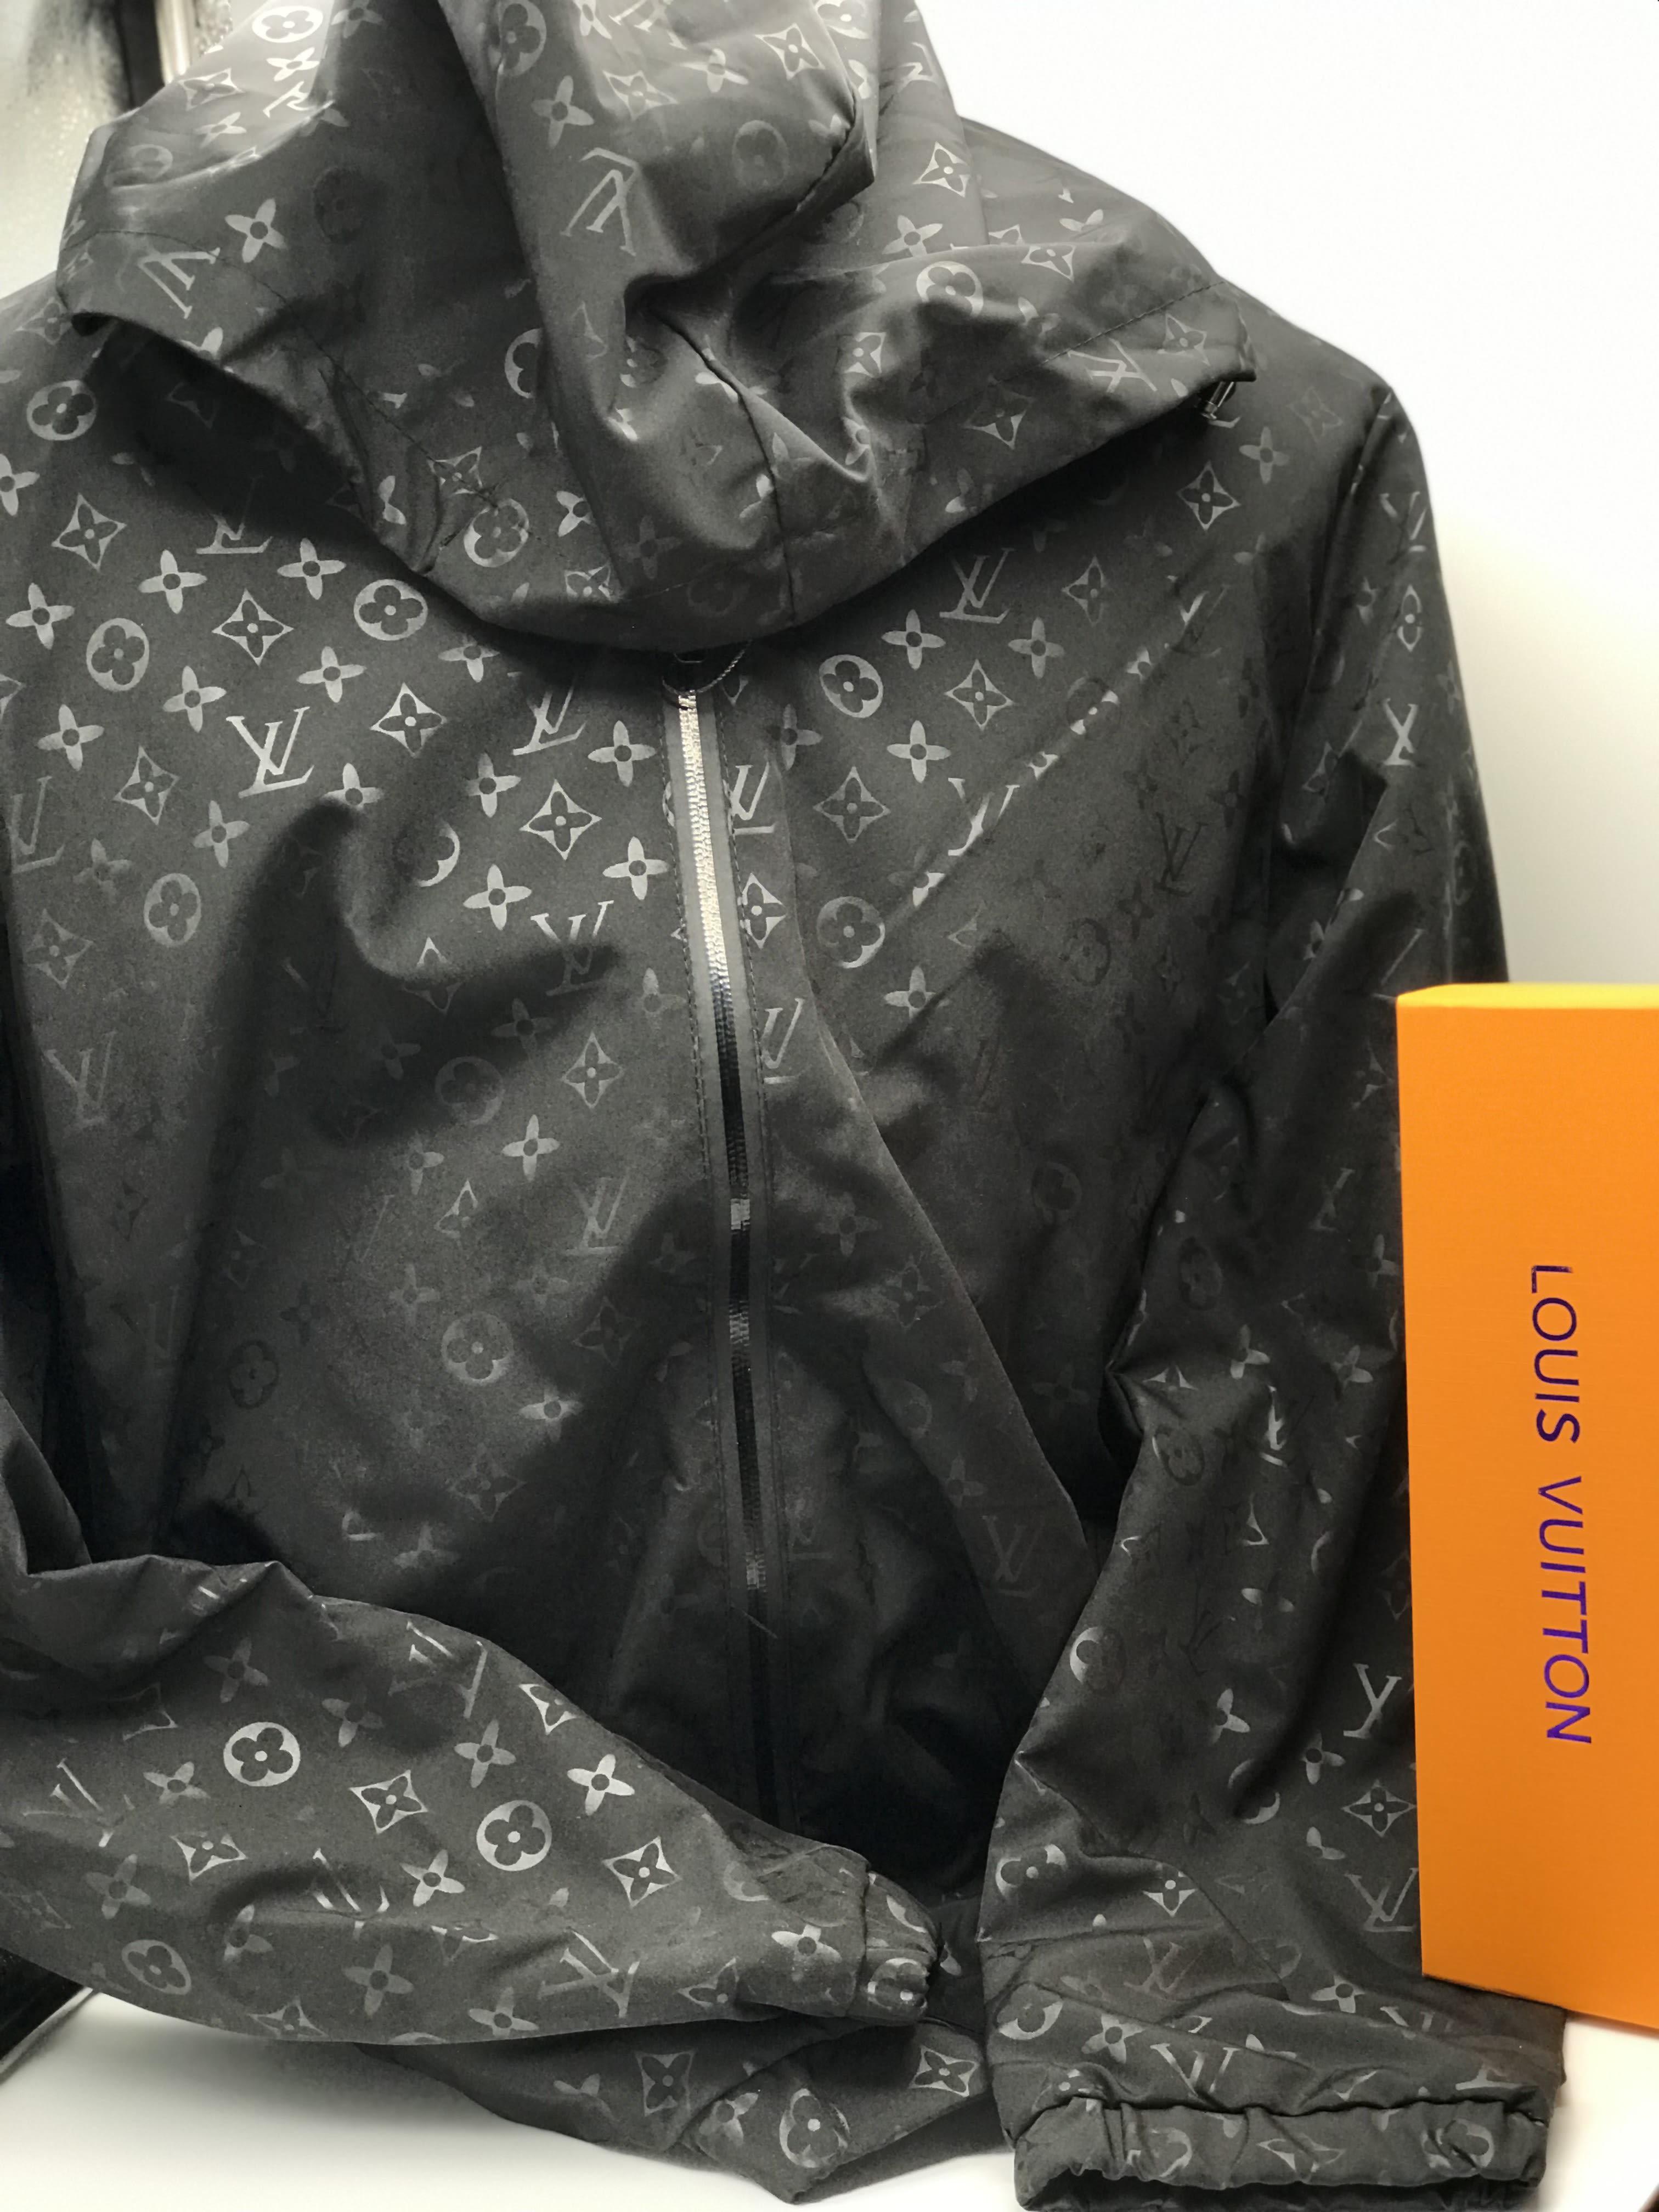 Chewy Vuitton Reflective Raincoat